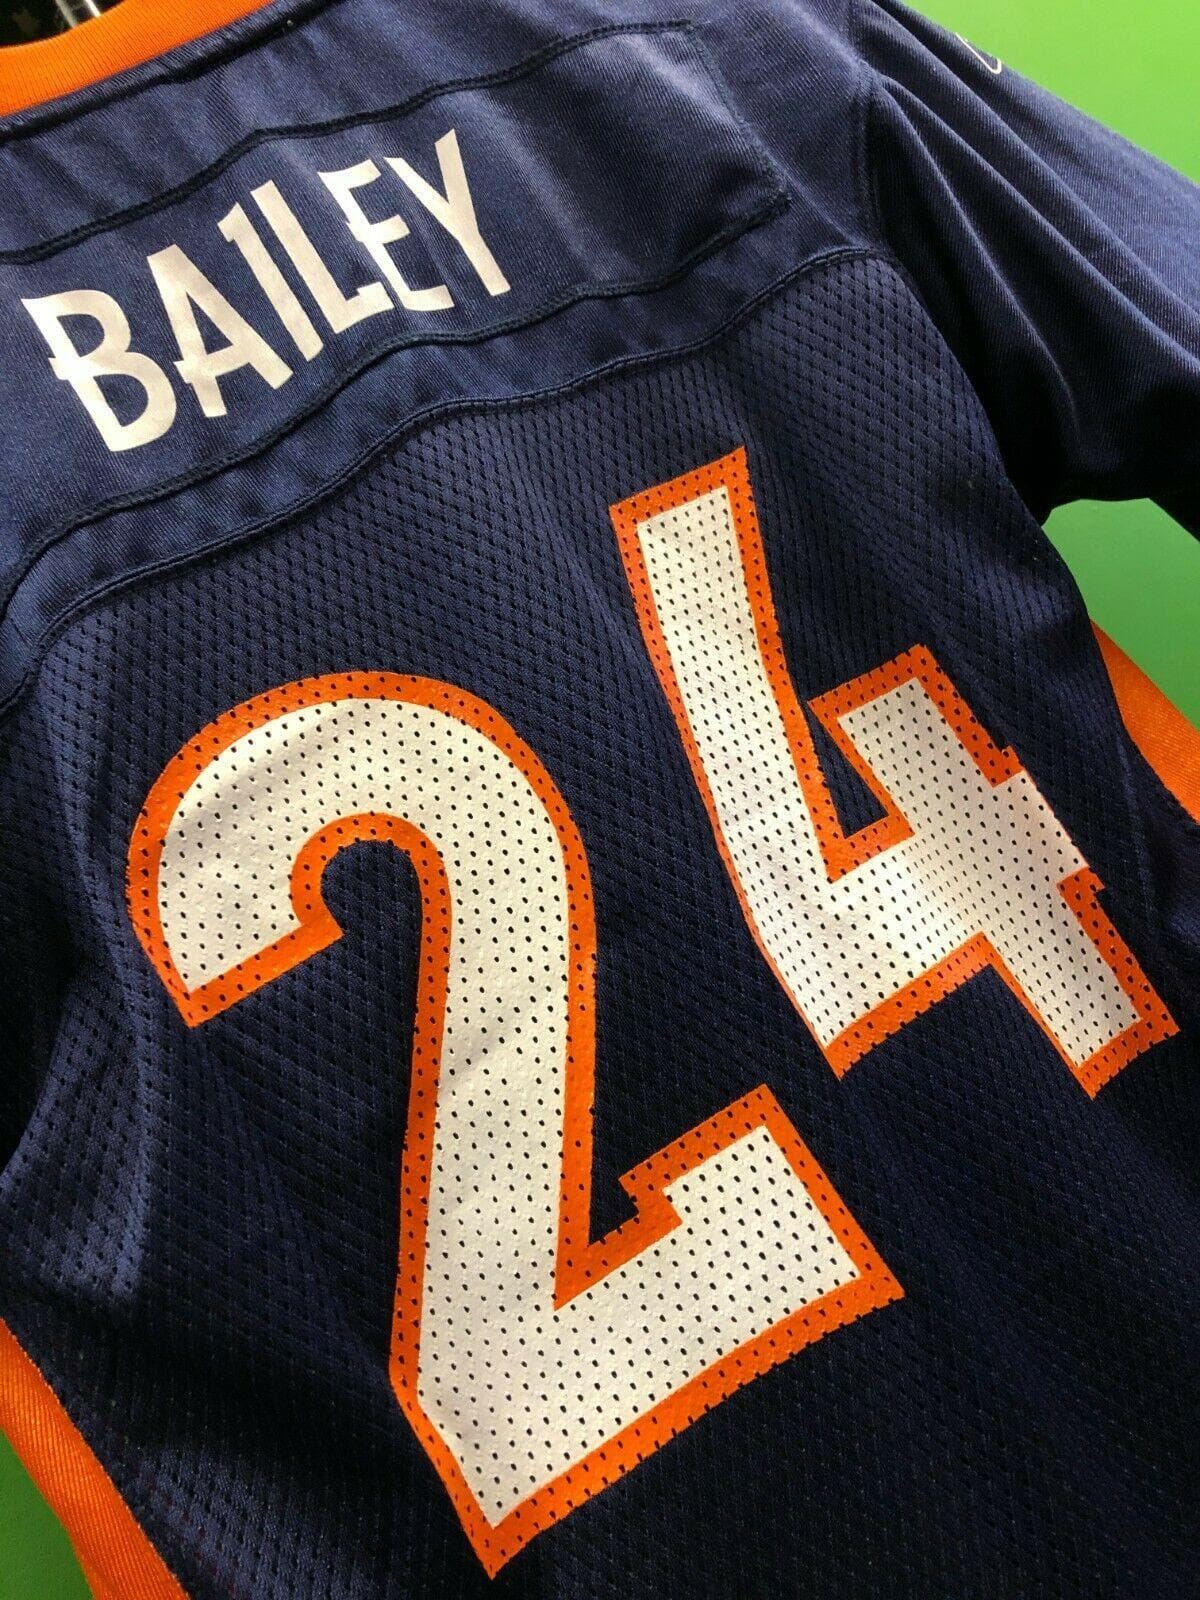 NFL Denver Broncos Champ Bailey #24 Reebok Jersey Youth Large 14-16